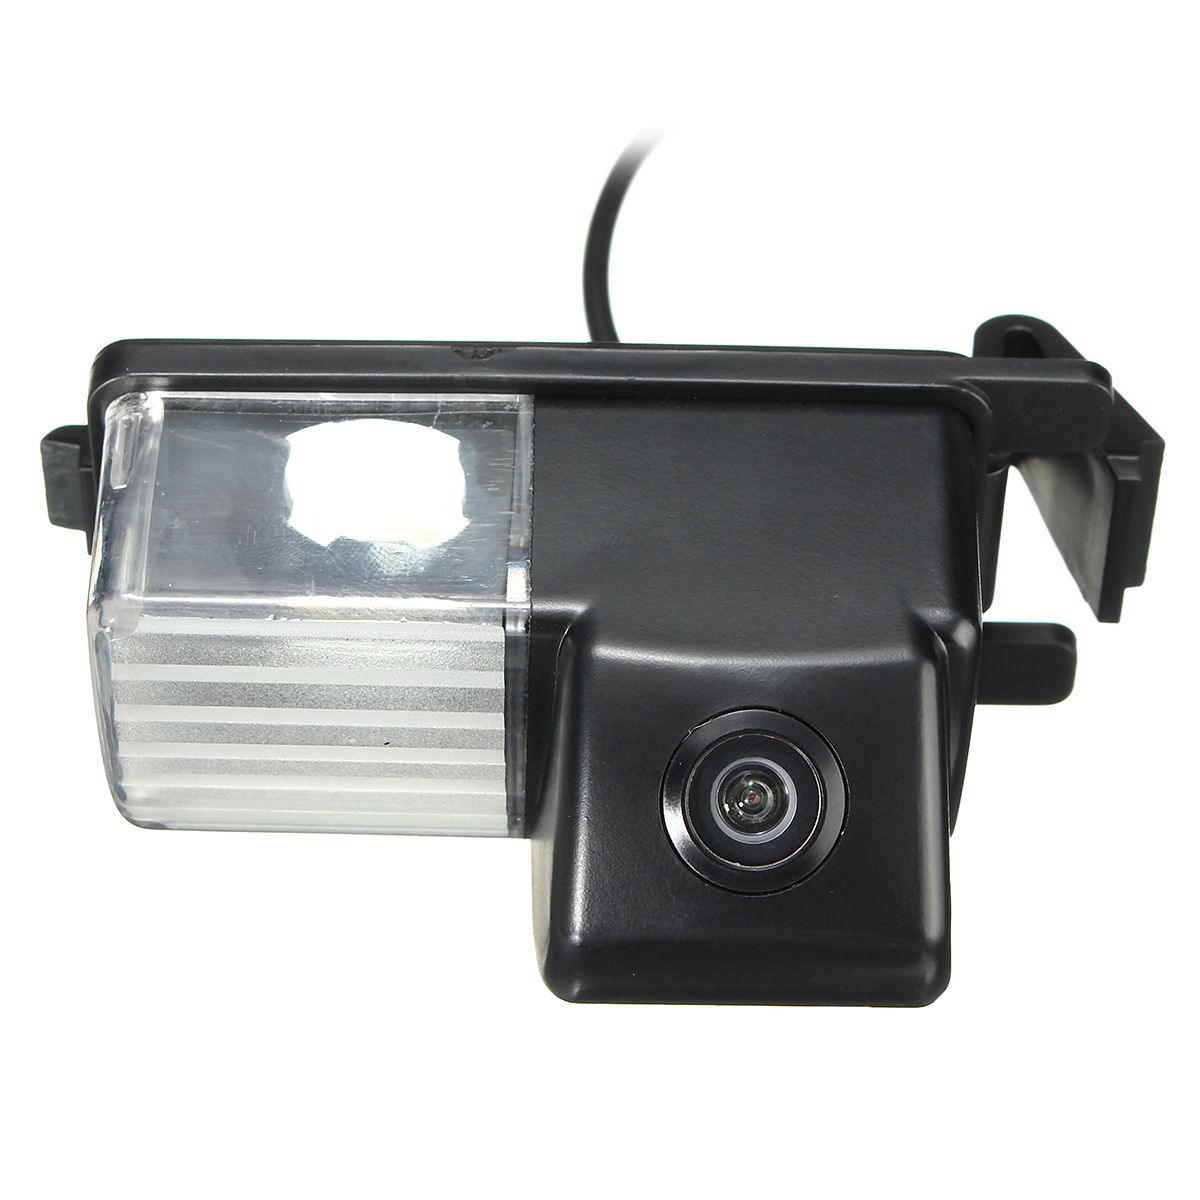 CCD-Rear-View-Camera-For-NISSAN-Versa-Pulsar-Cube-350Z-370Z-GTR-Infiniti-G35-G37-1113669